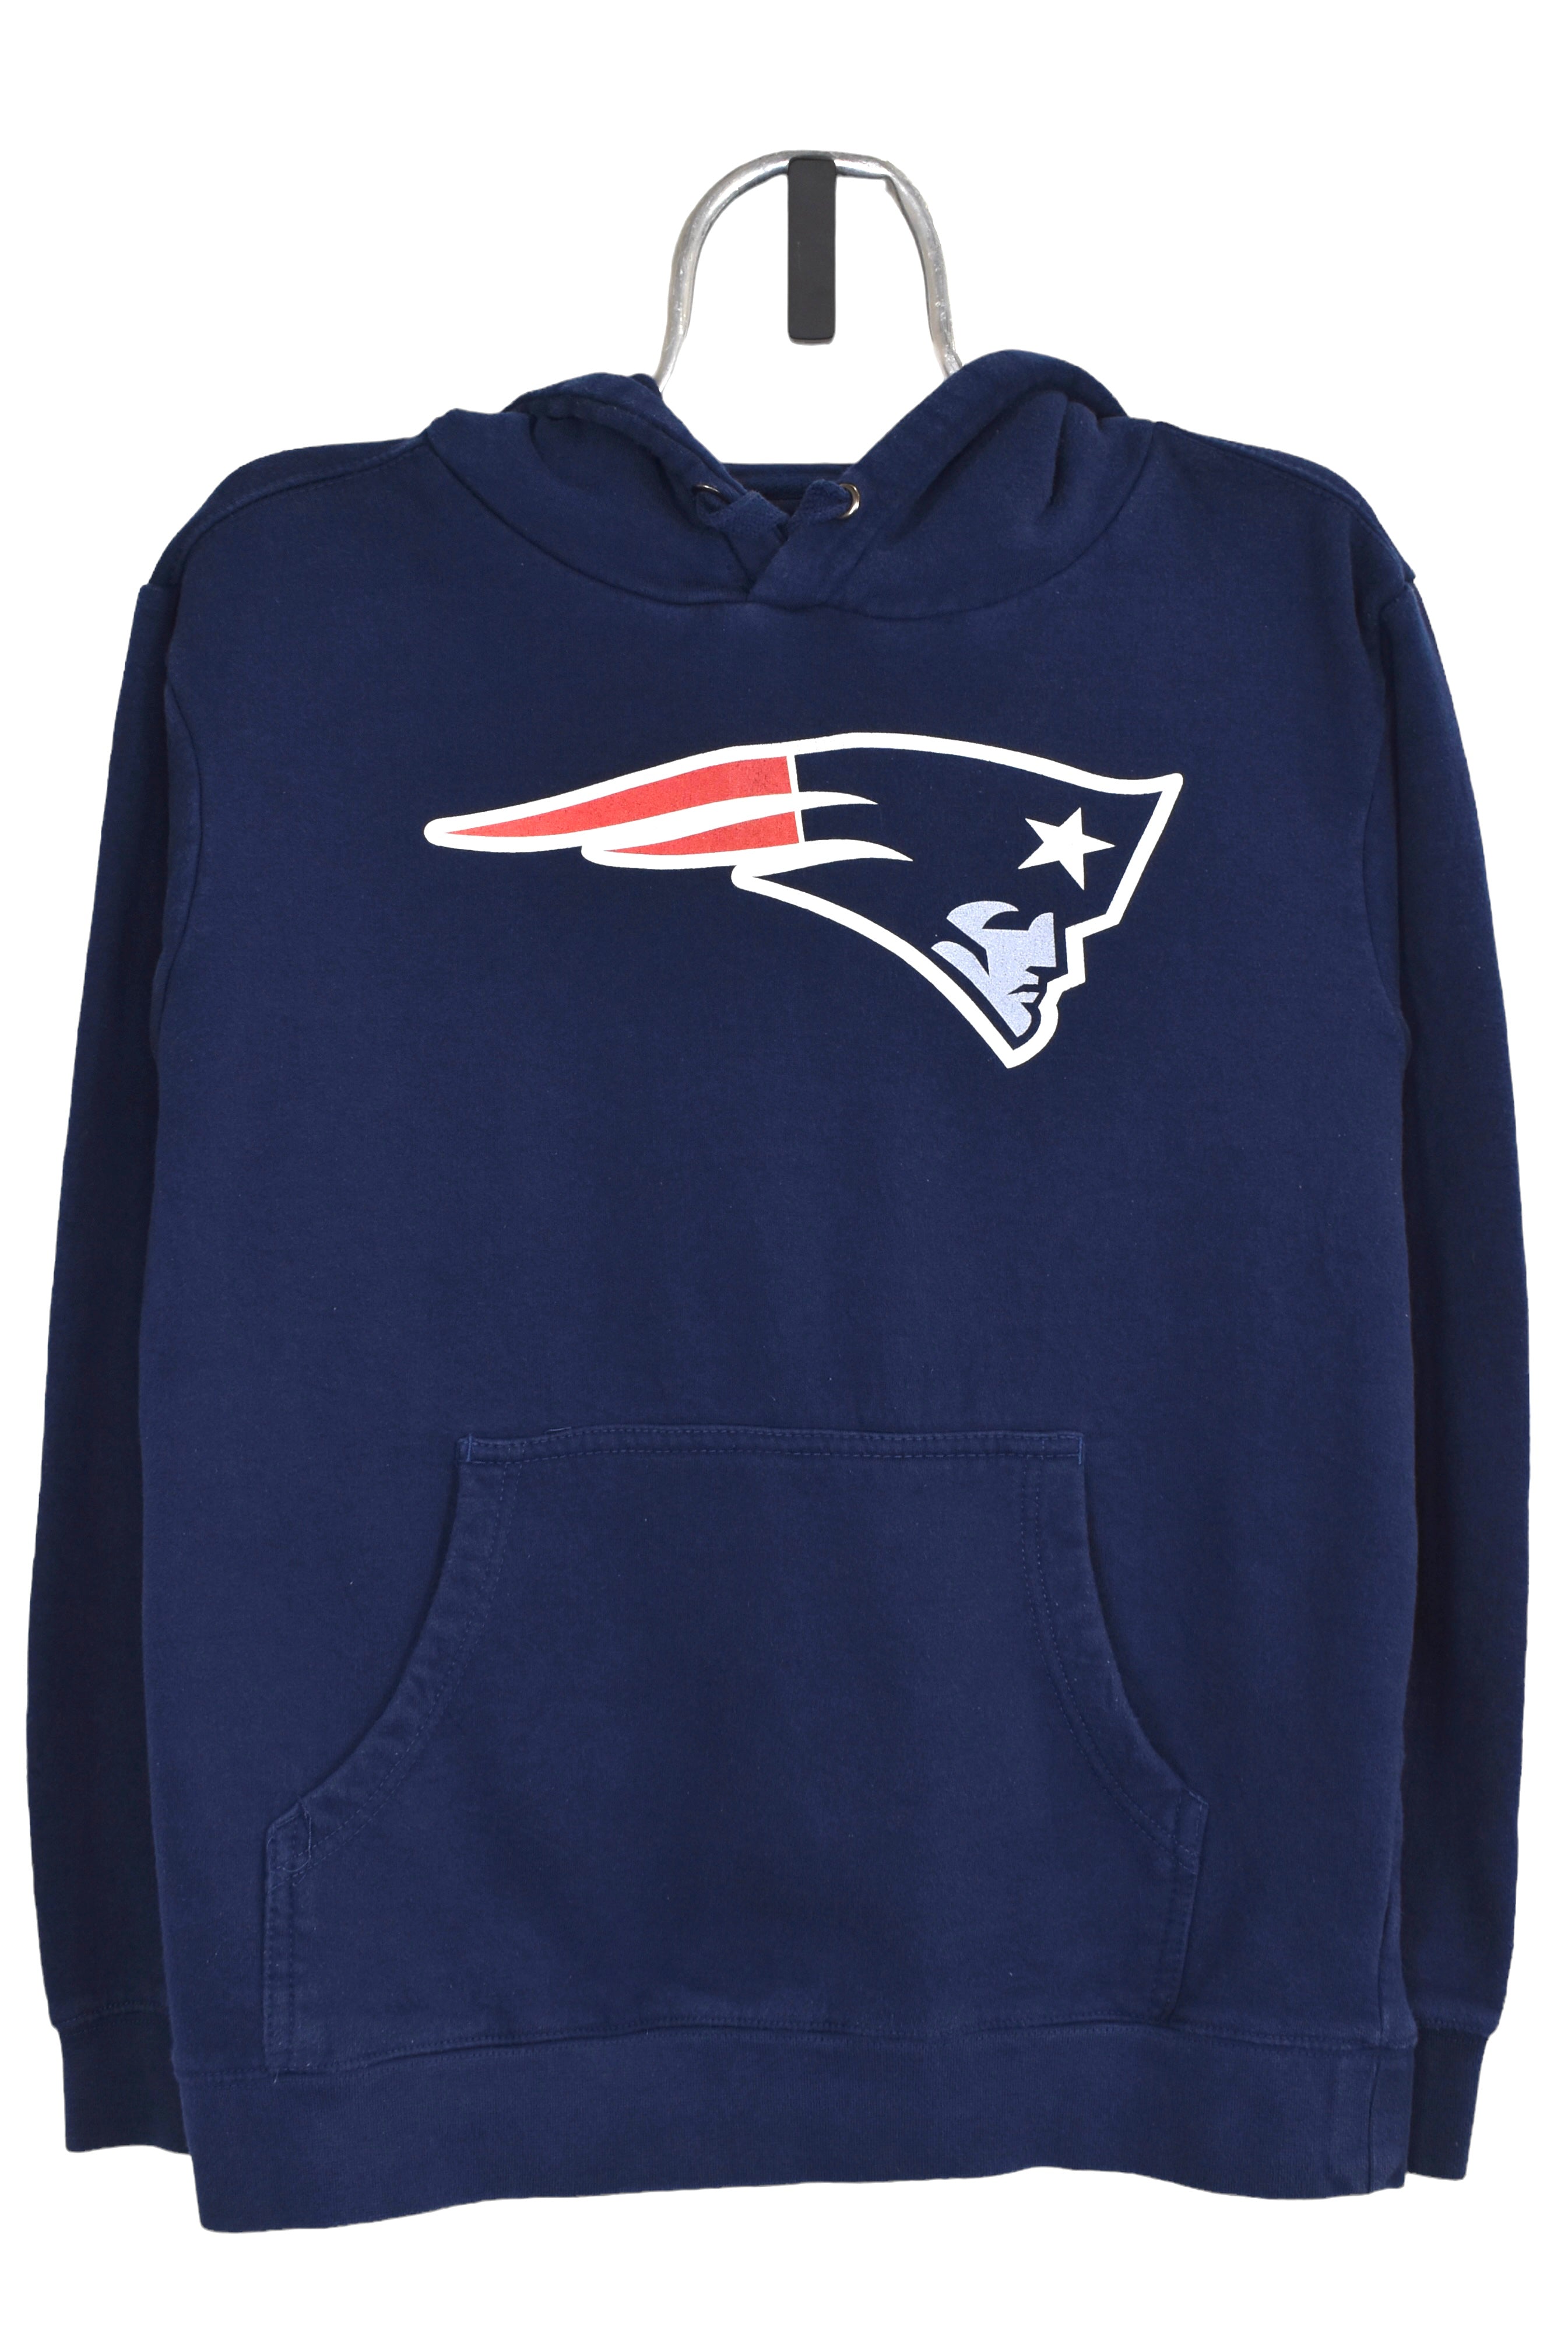 Vintage New England Patriots hoodie Medium, navy NFL graphic sweatshirt